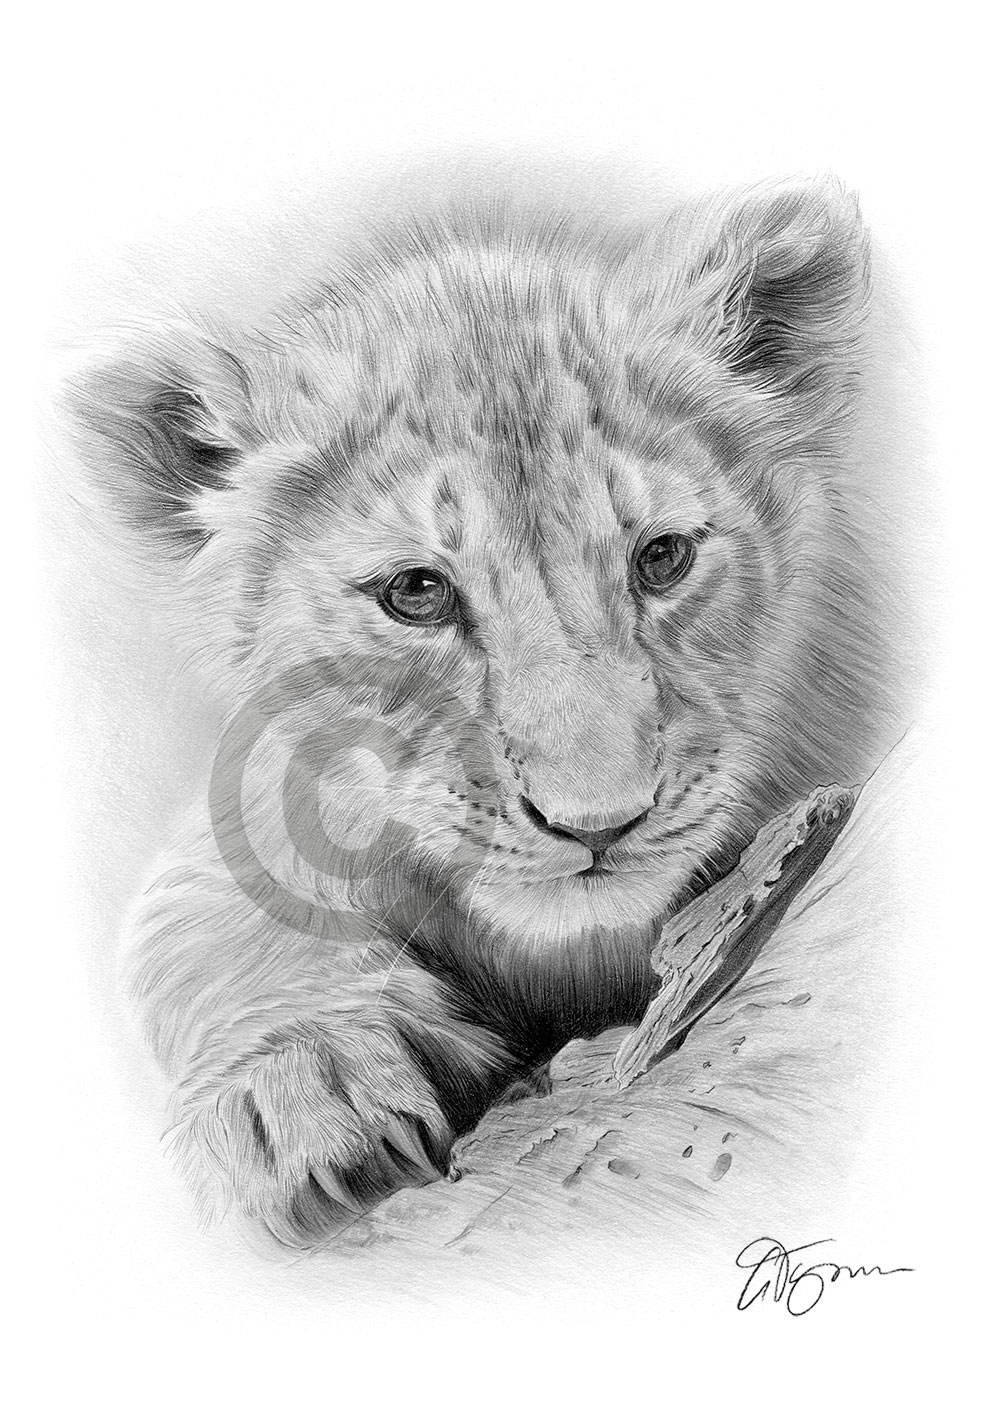 Pencil drawing of a lion cub by UK artist Gary Tymon